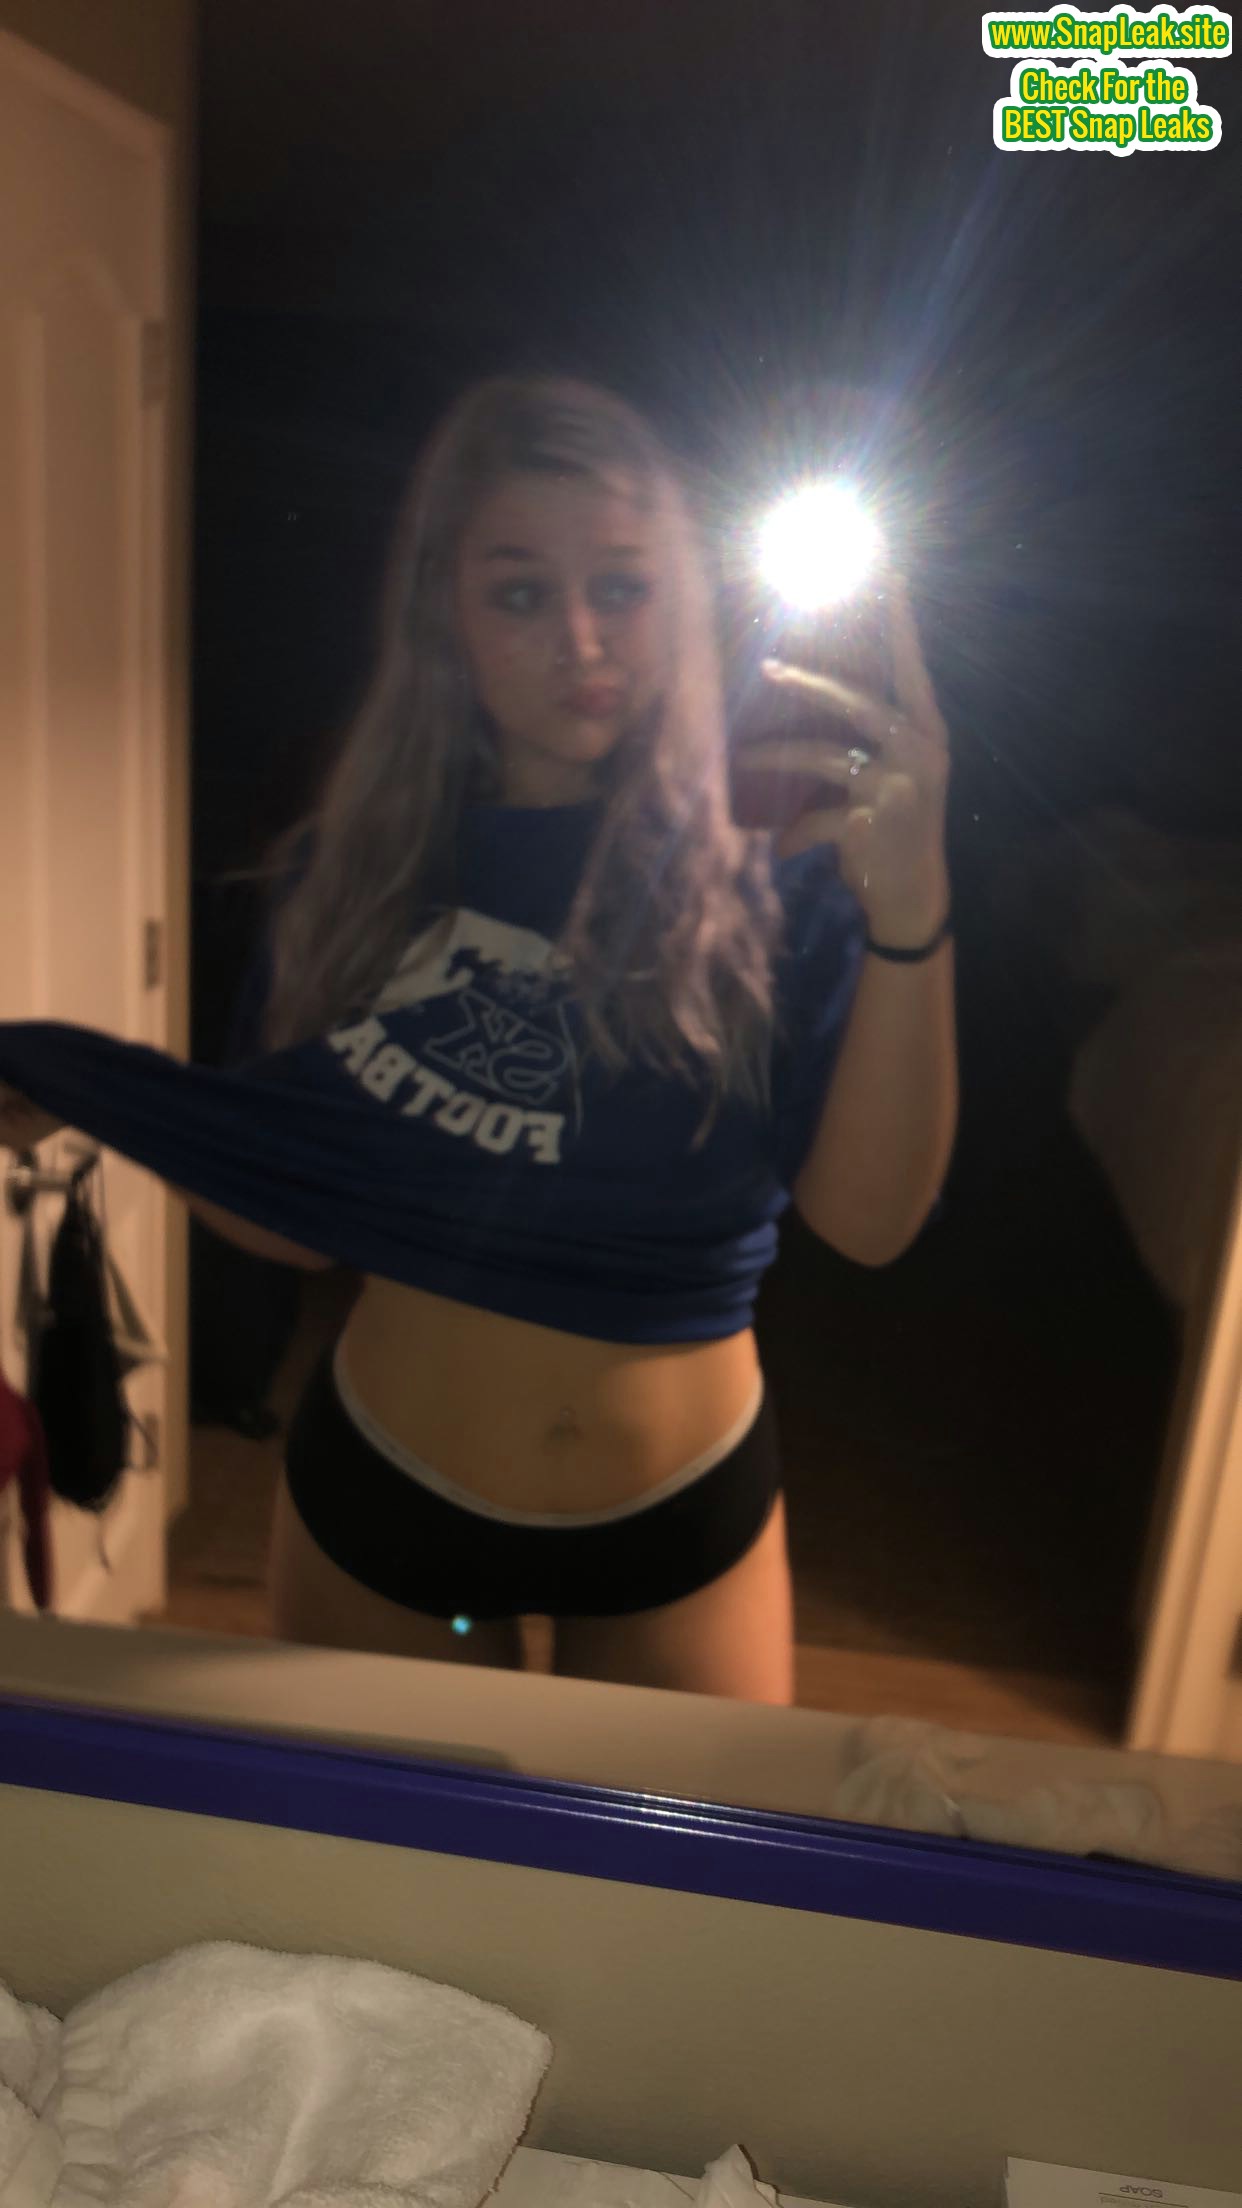 Stunning Blonde Teen Leaked Snapchat